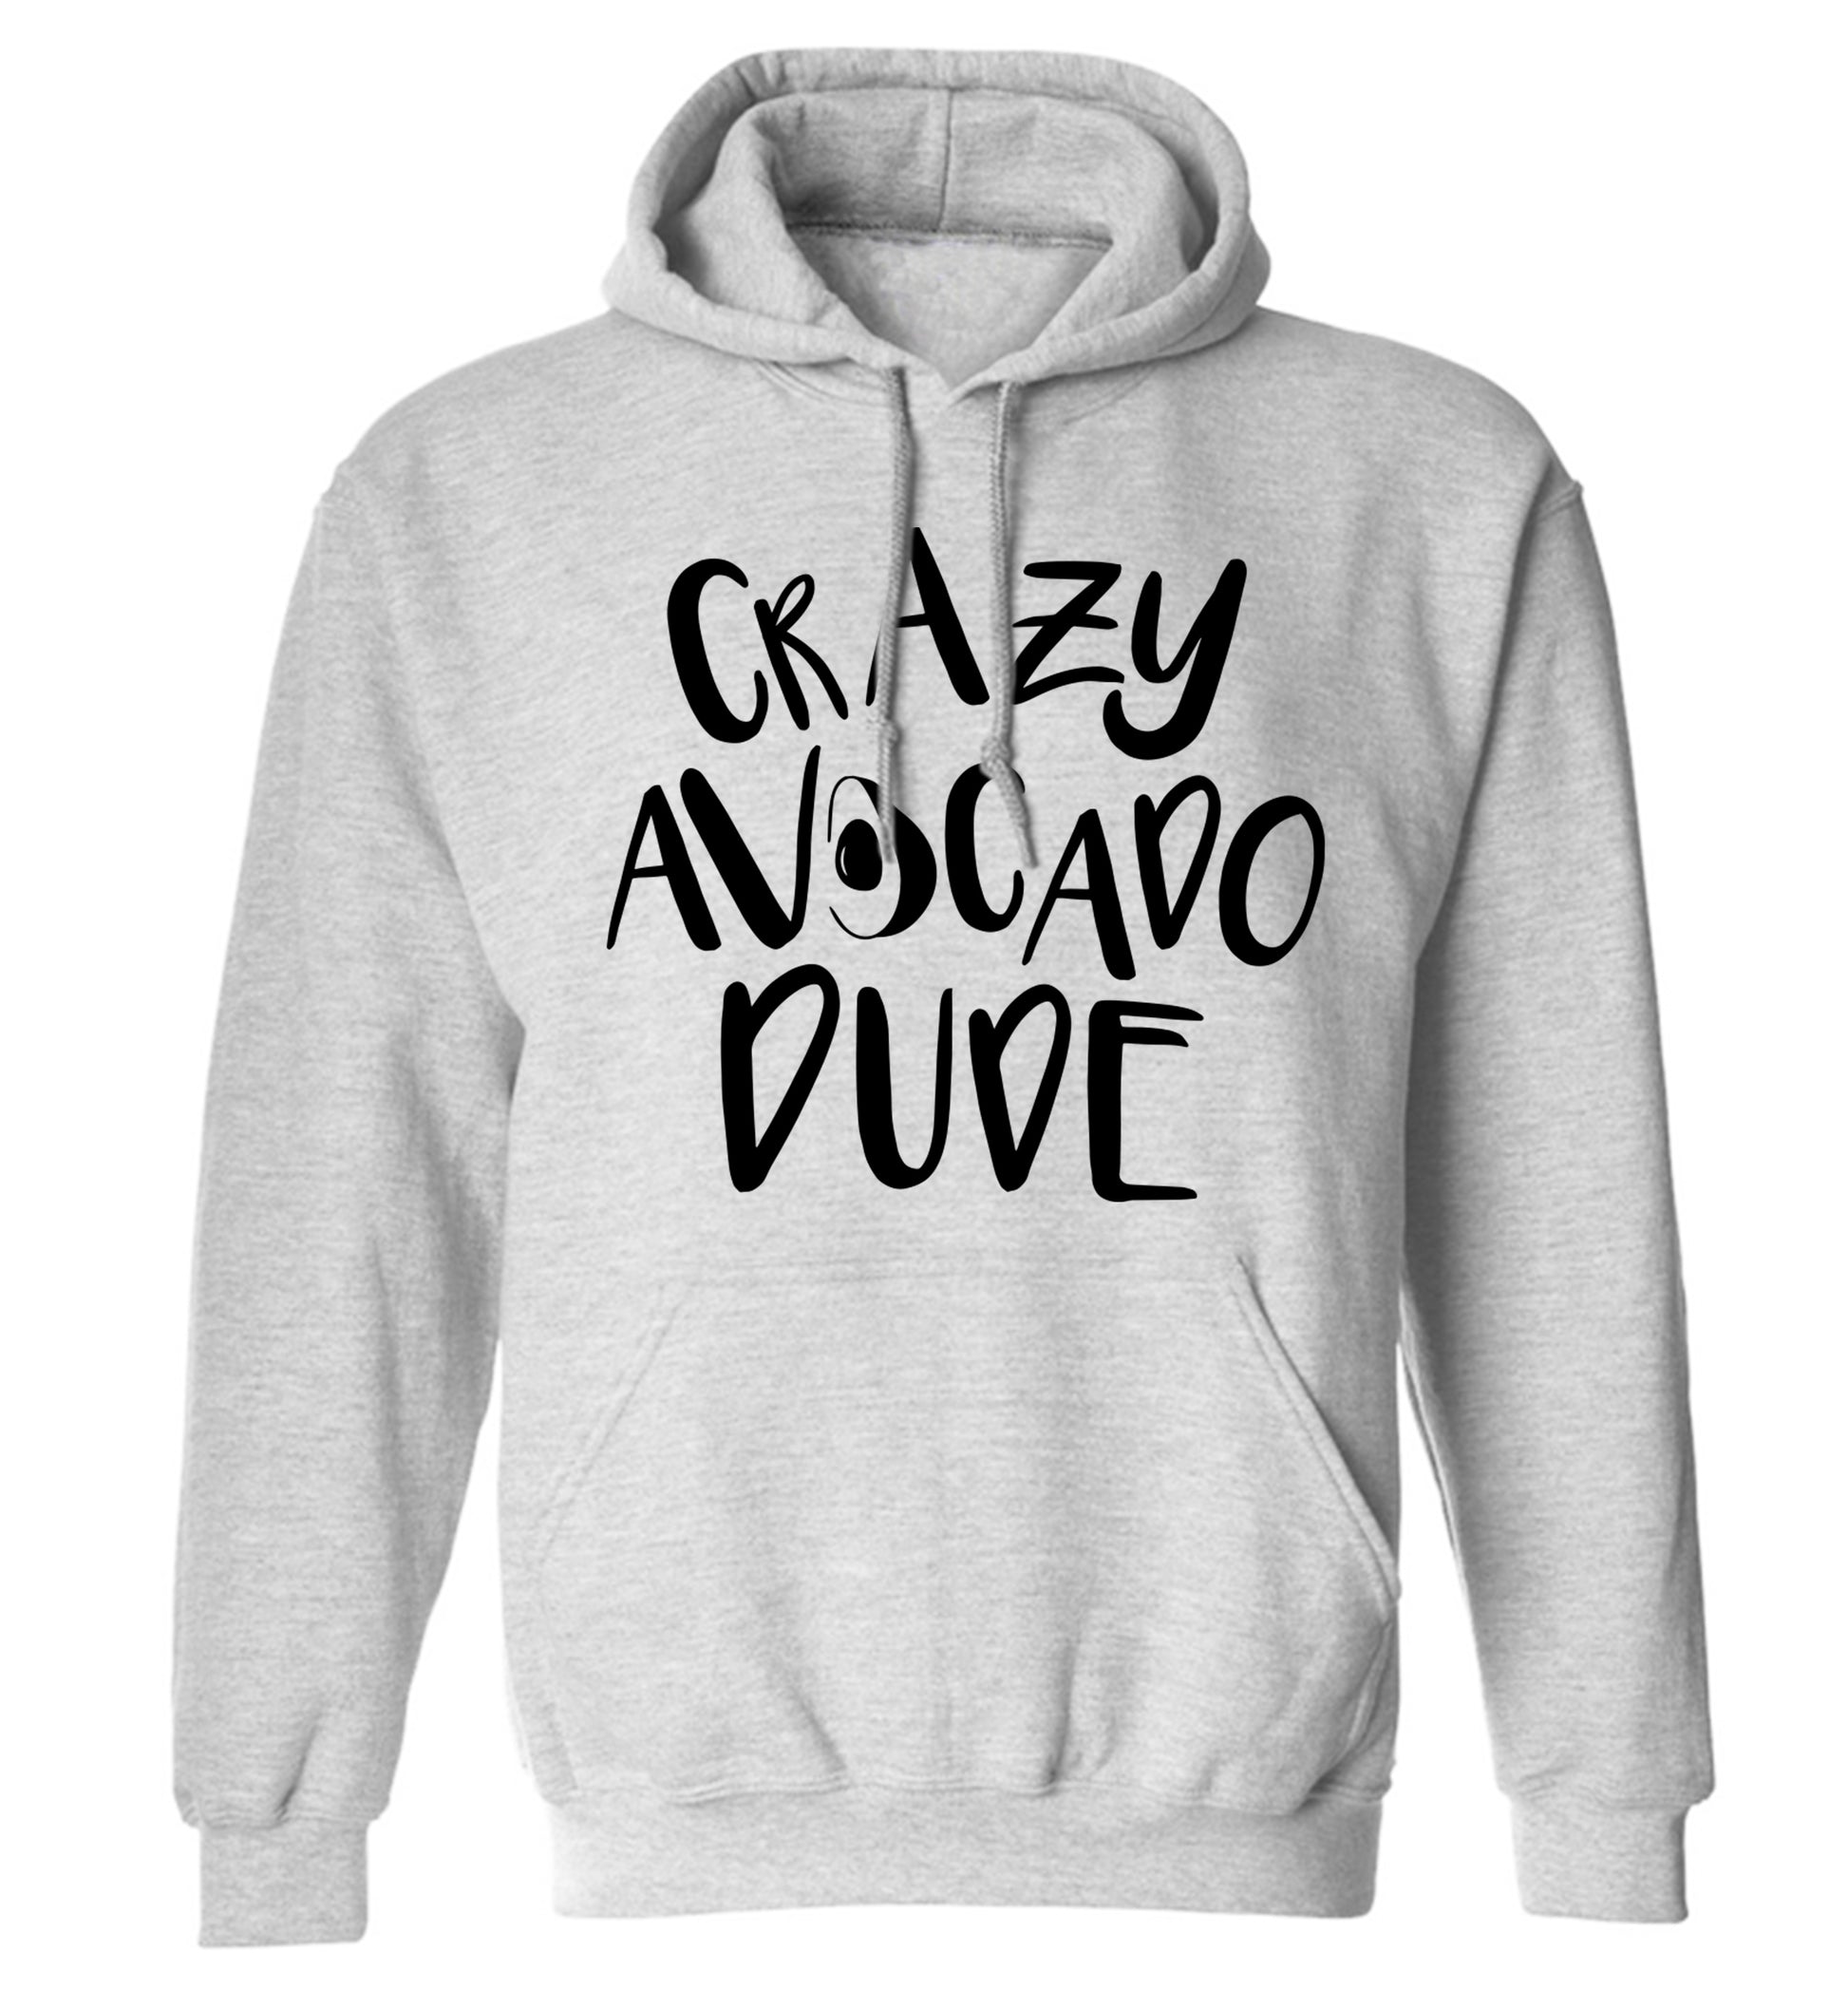 Crazy avocado dude adults unisex grey hoodie 2XL